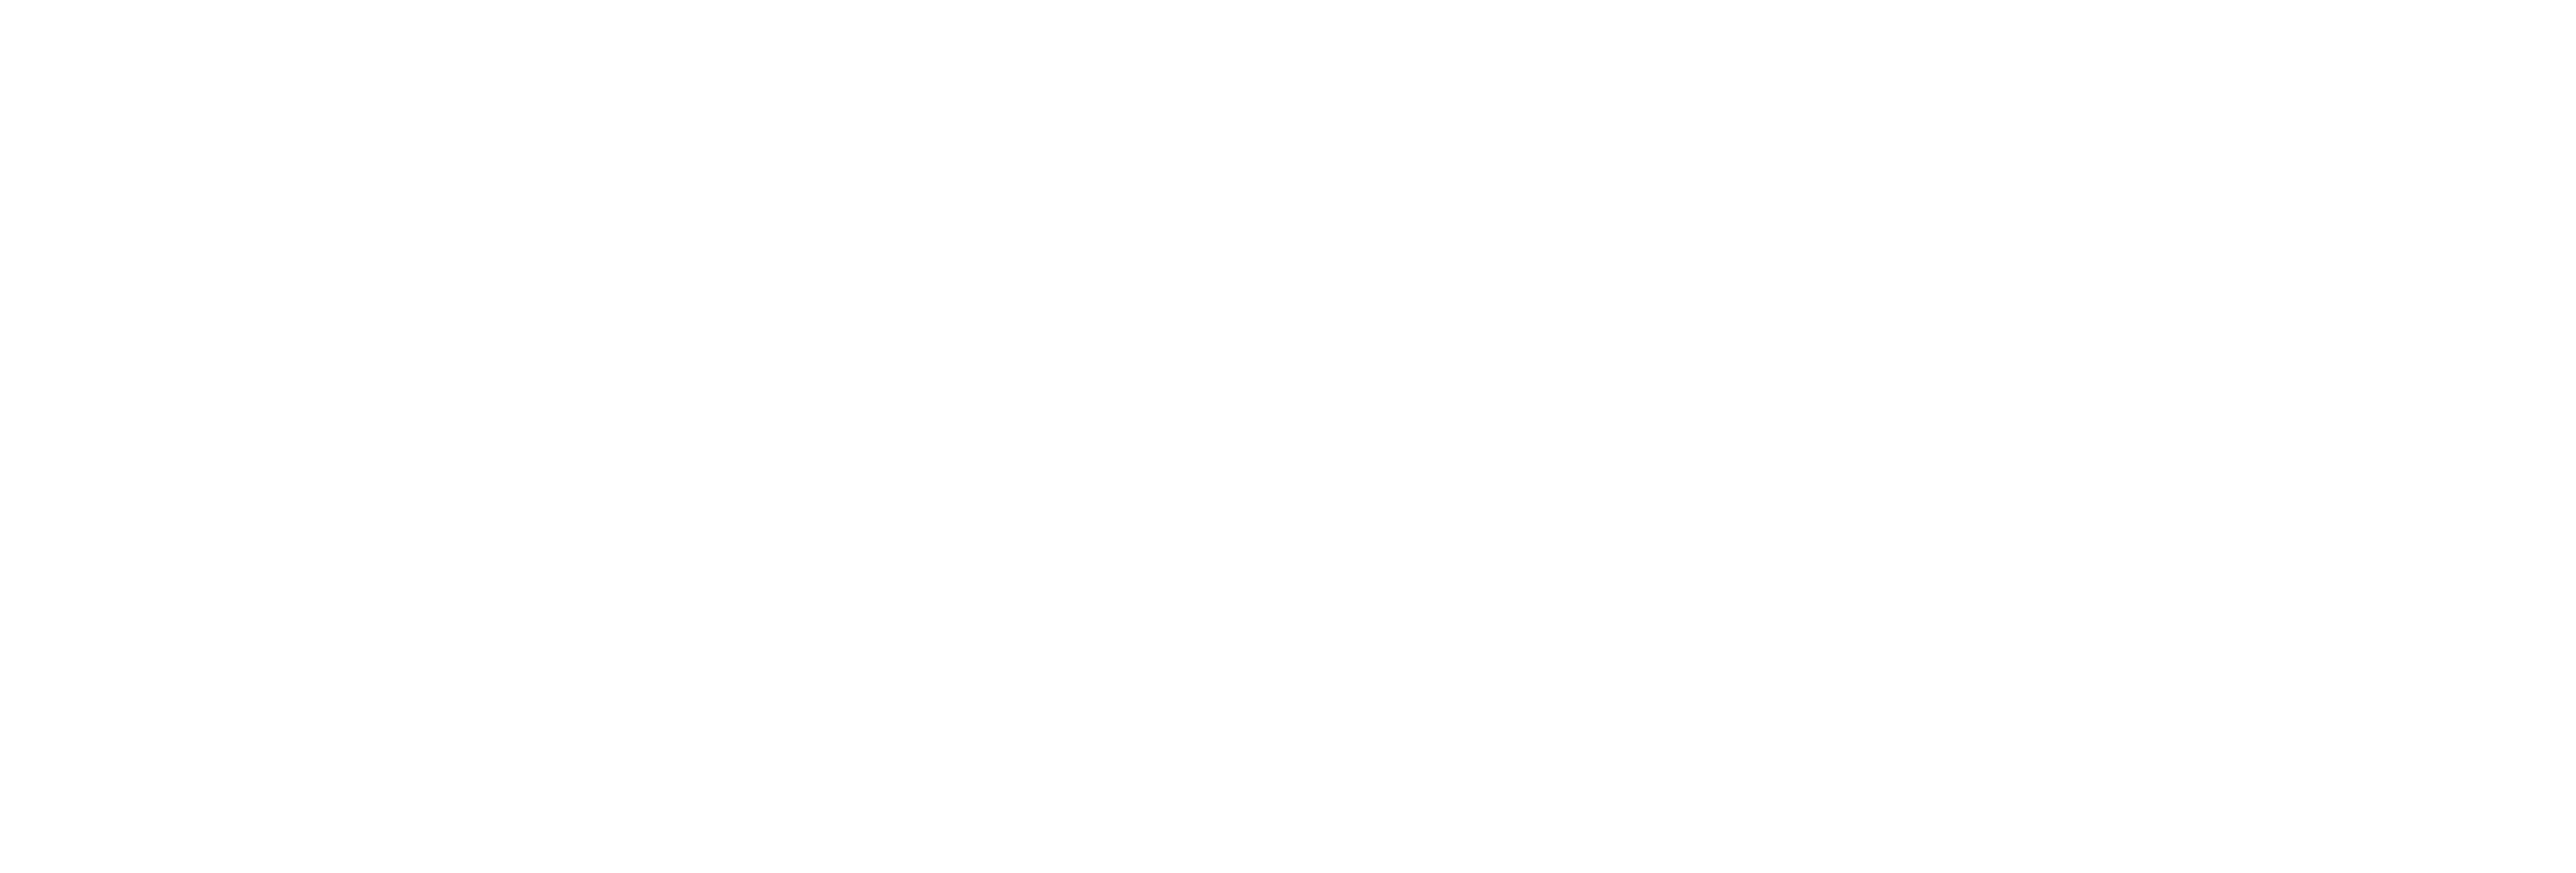 Rob Cosman